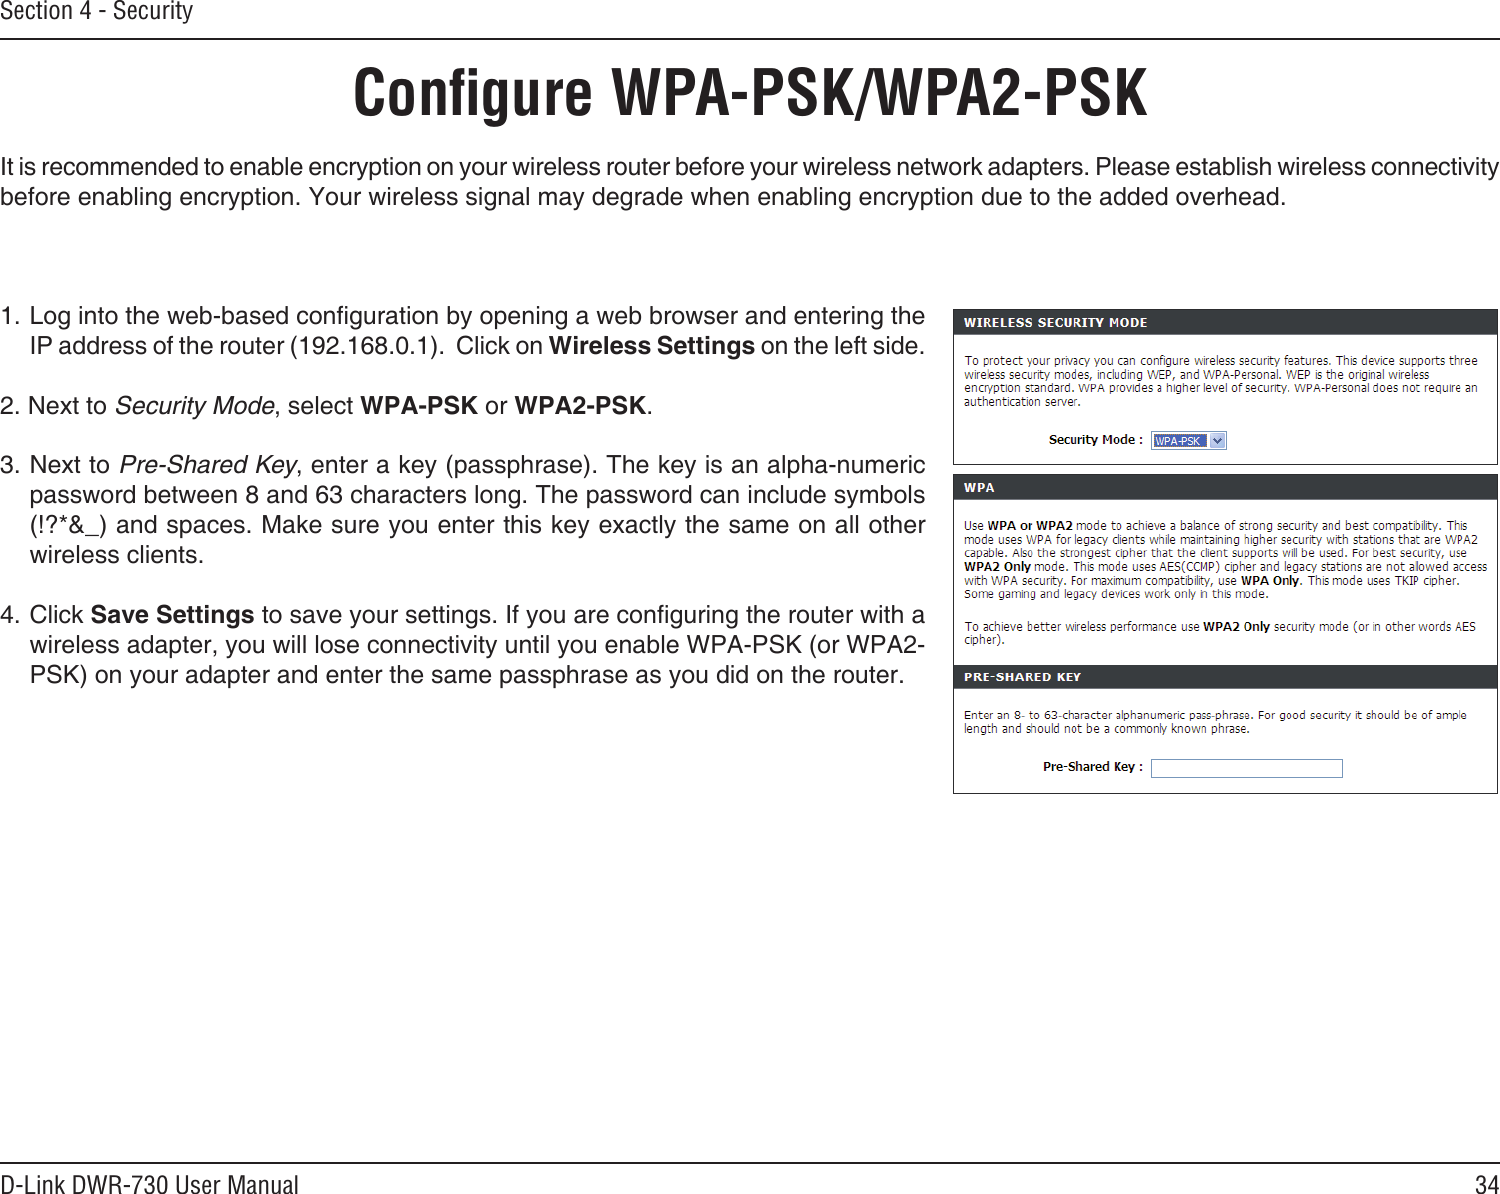 34D-Link DWR-730 User ManualSection 4 - SecurityConﬁgure WPA-PSK/WPA2-PSKSecurity ModePre-Shared Key